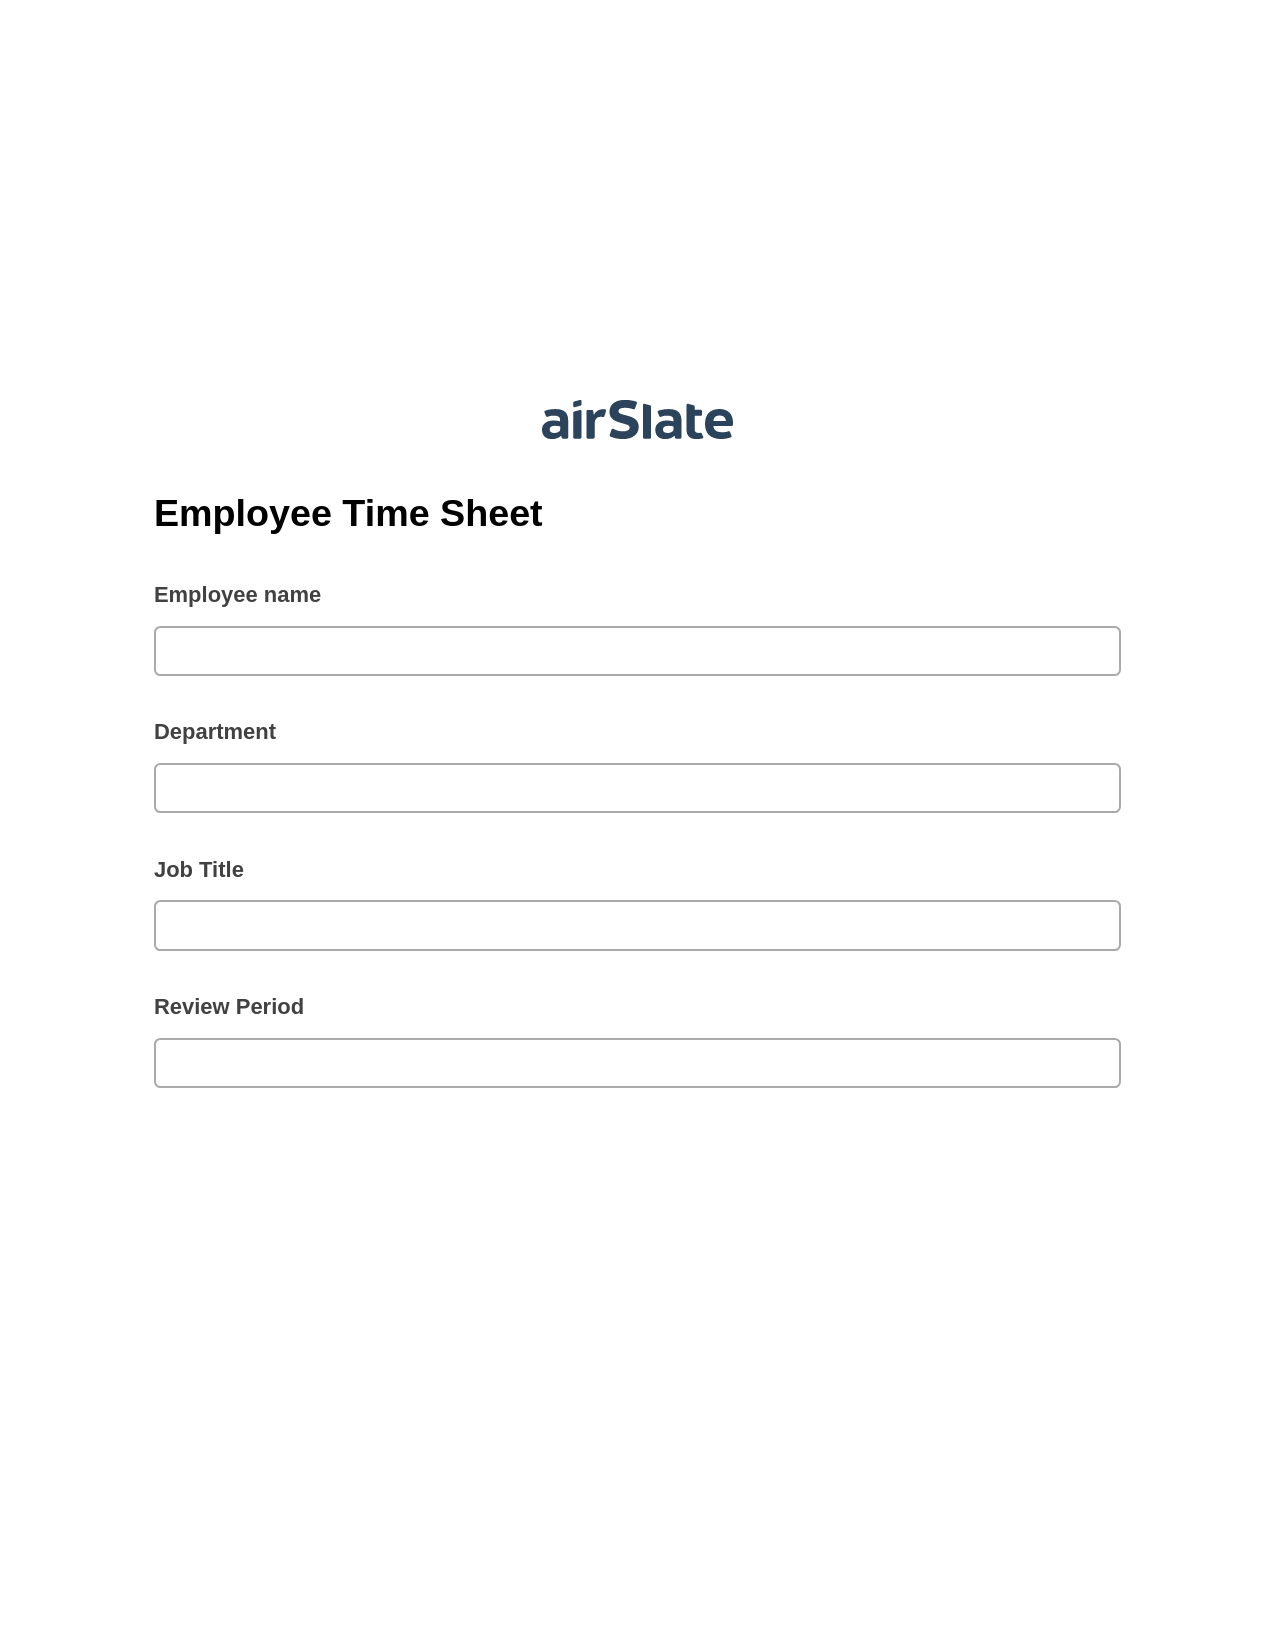 Employee Time Sheet Pre-fill from Google Sheets Bot, Create Salesforce Records Bot, Webhook Postfinish Bot